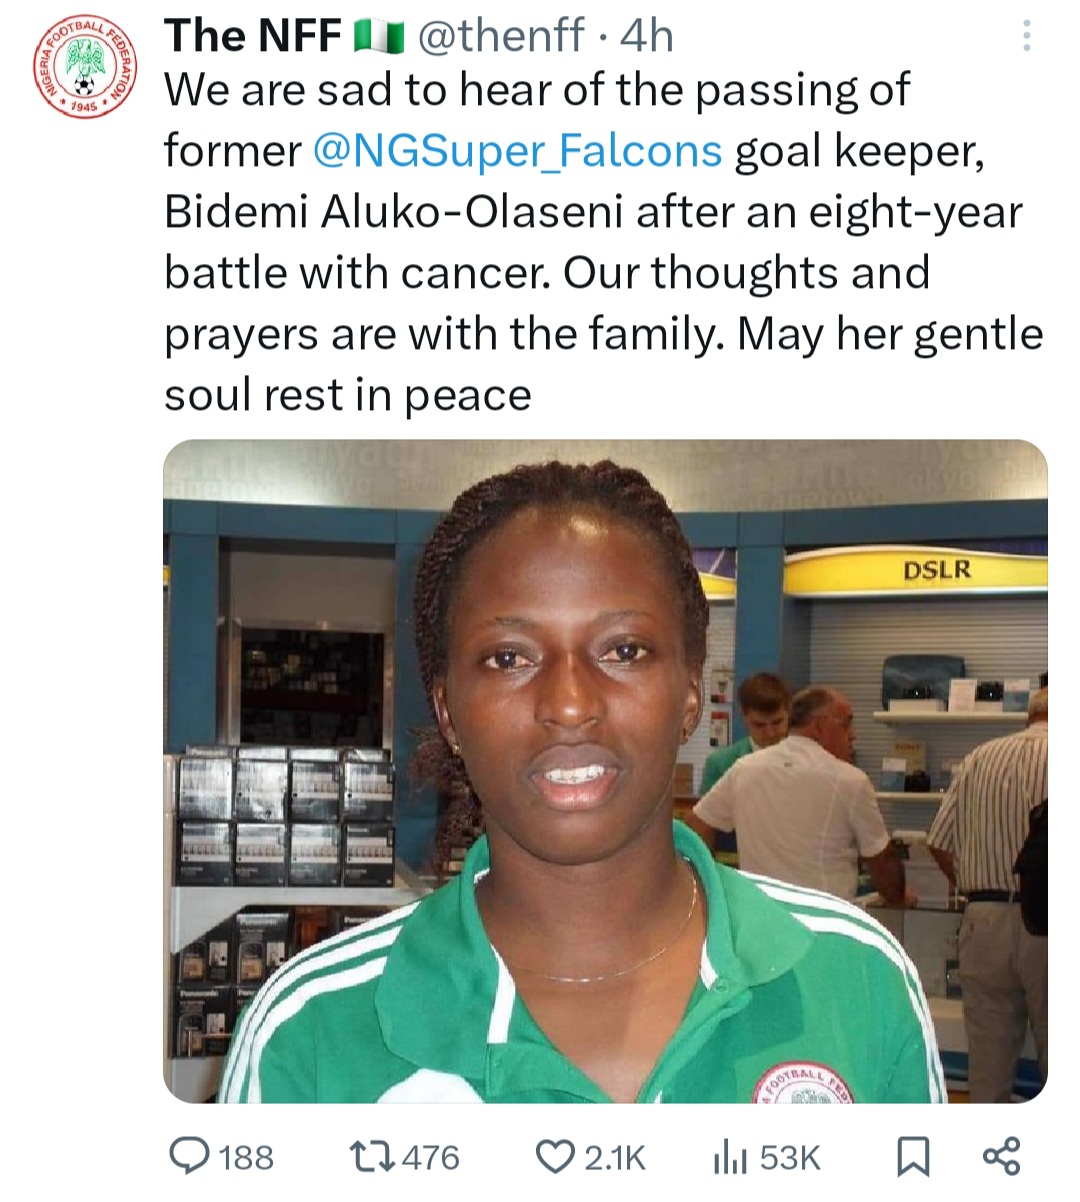 Super Falcons ex-goalkeeper, Bidemi Aluko-Olaseni, dies after cancer battle